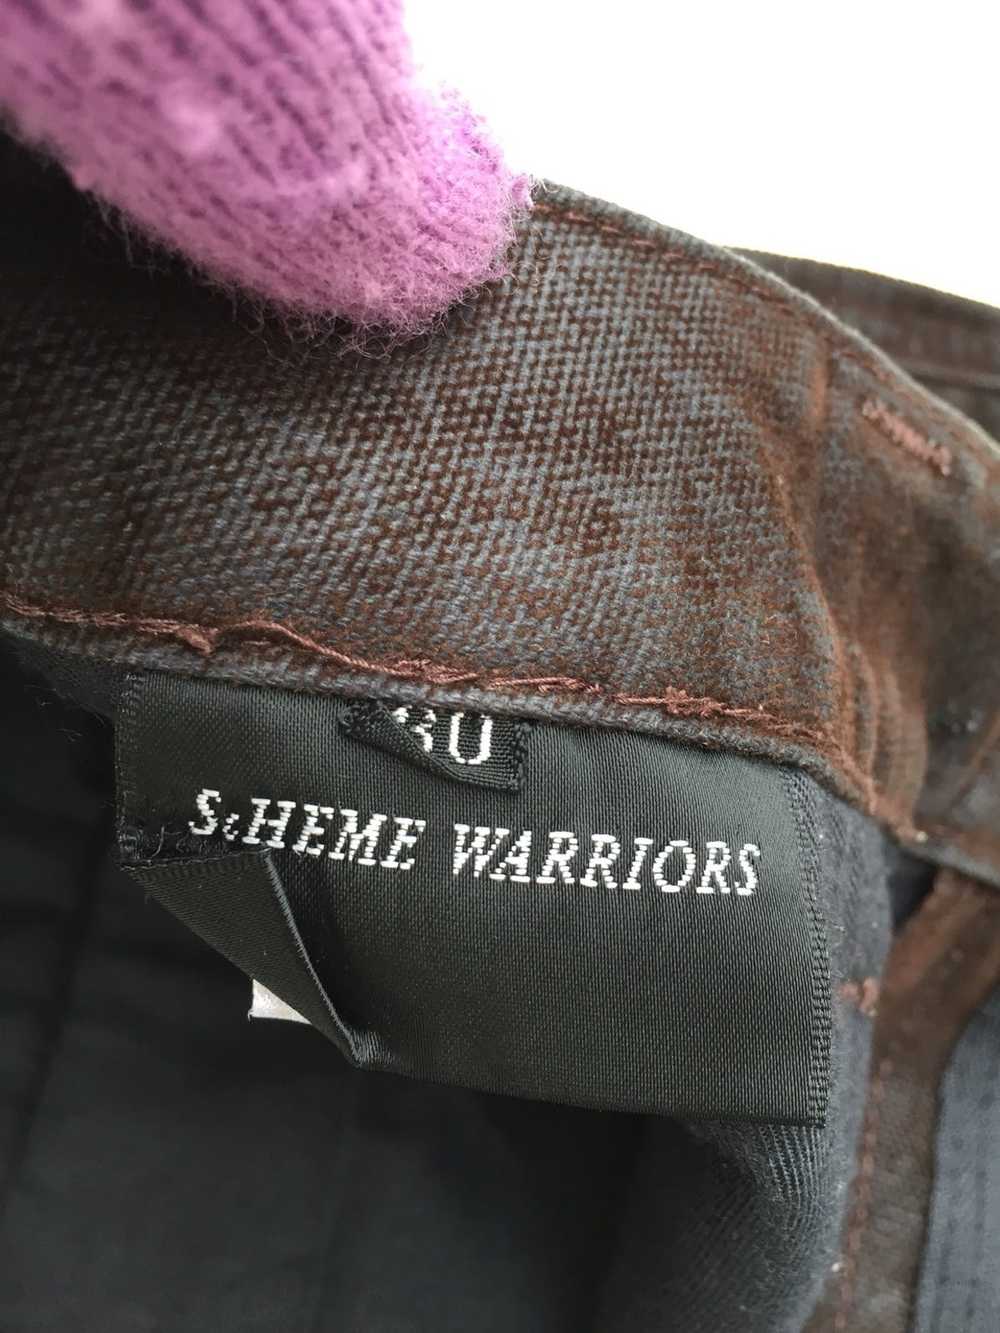 Japanese Brand Japanese Brand Scheme Warriors Pant - image 10